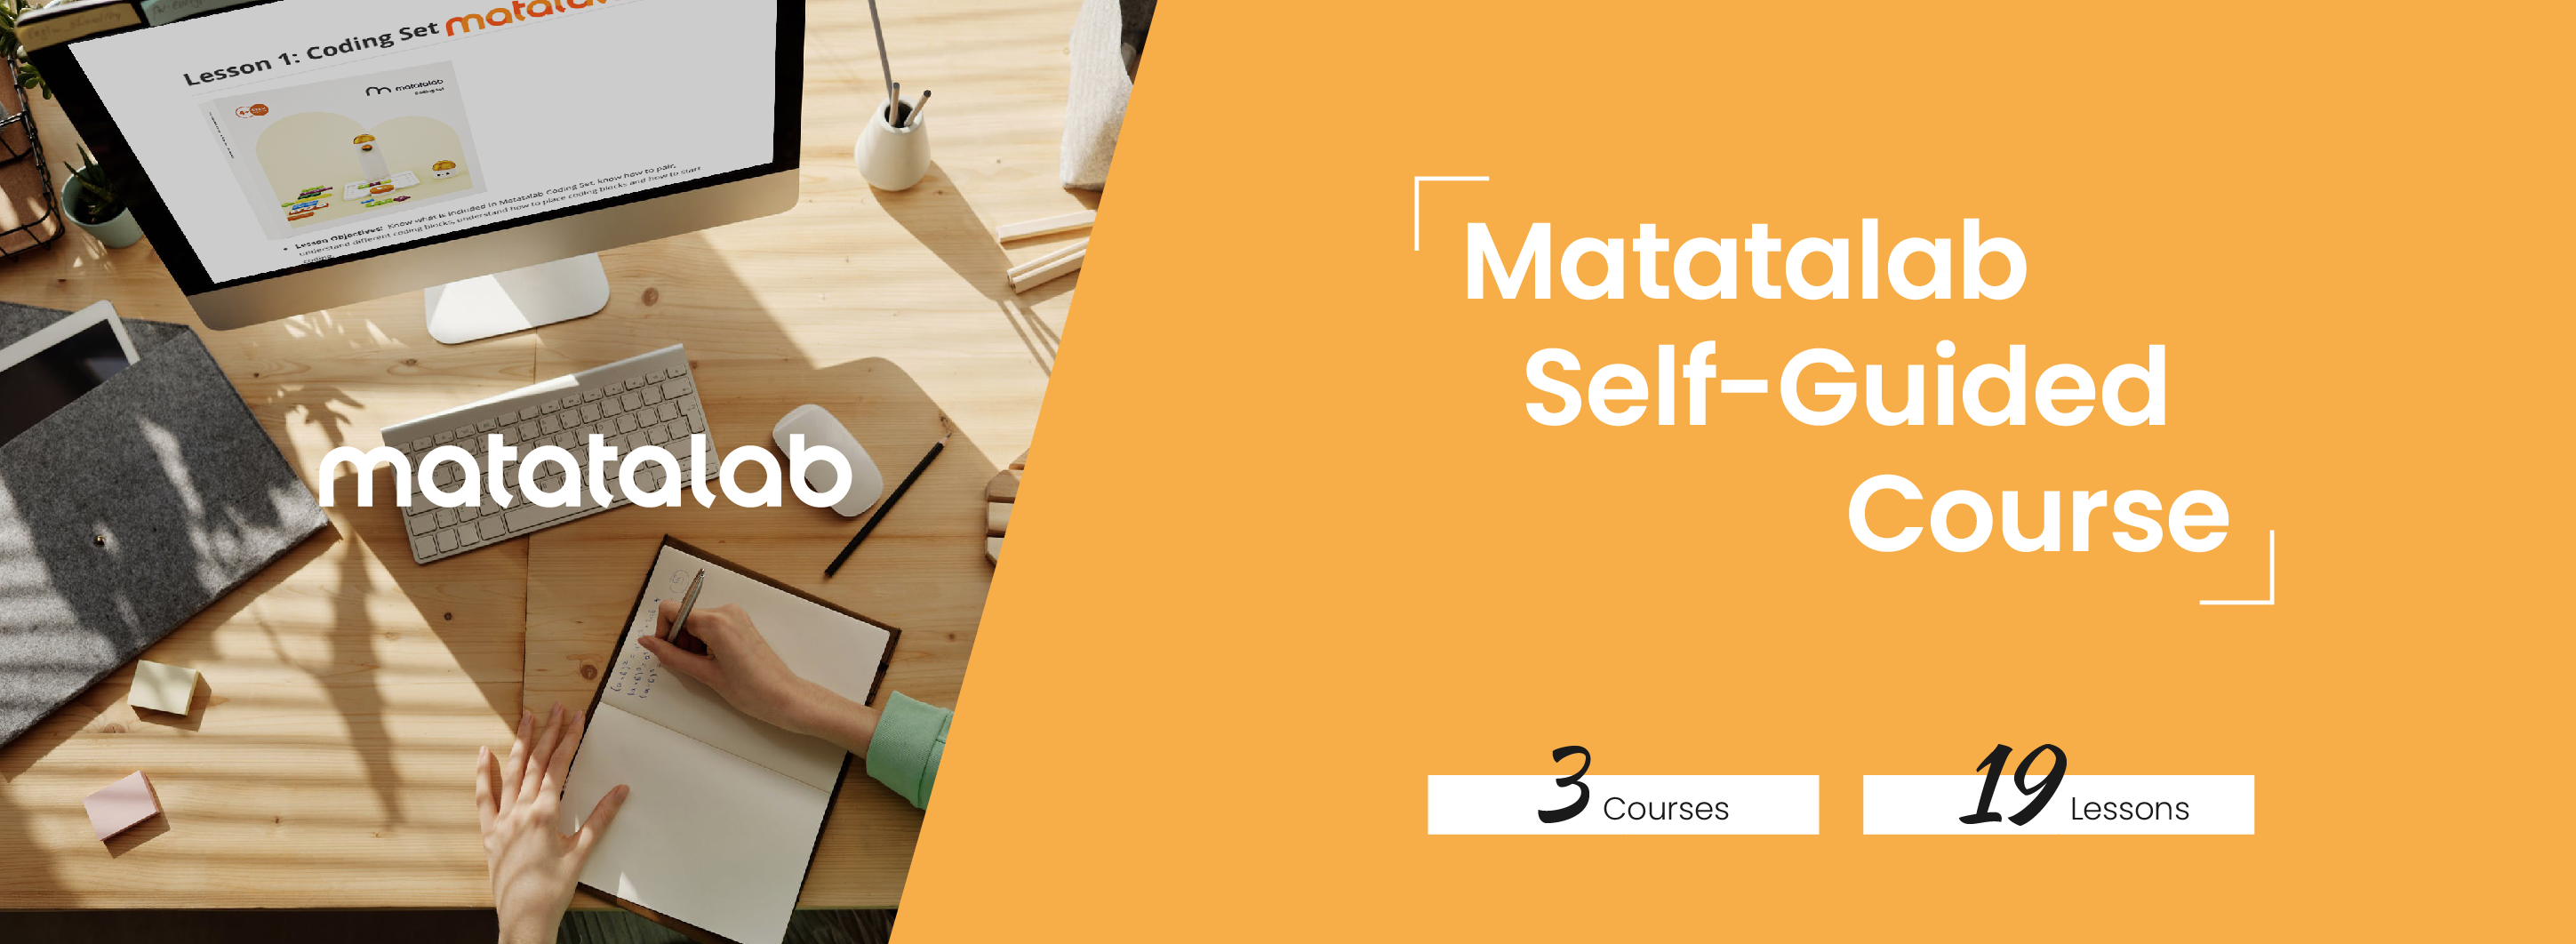 Matatalab Self-Guided Course - Coding Toys - Matatalab